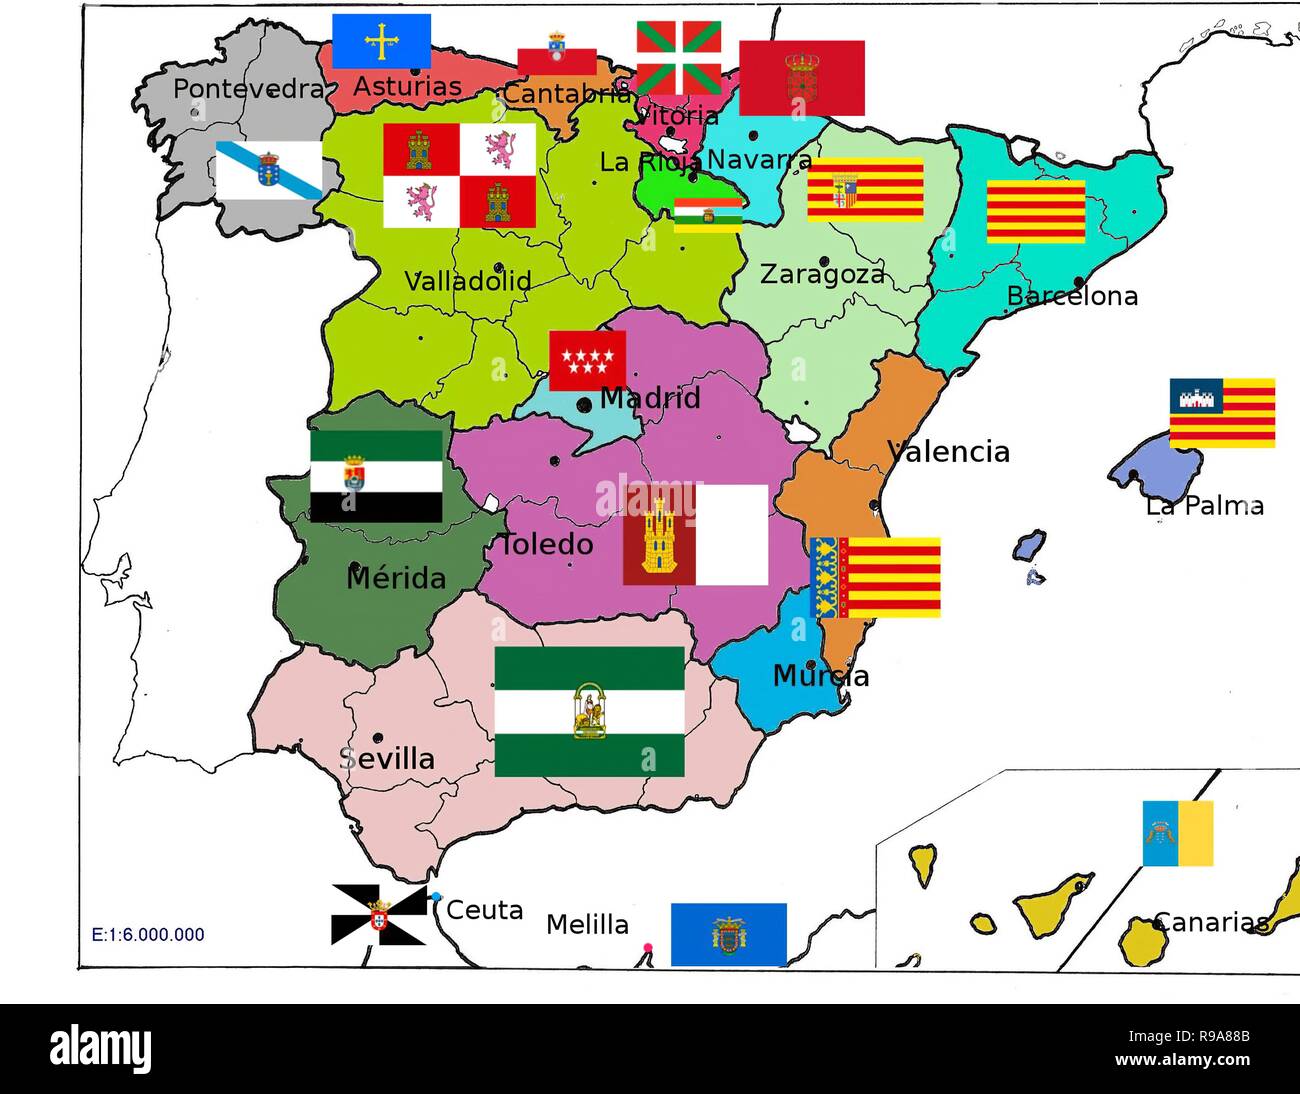 Mapa de España con las autonómias pintadas con sus banderas. Stock Photo